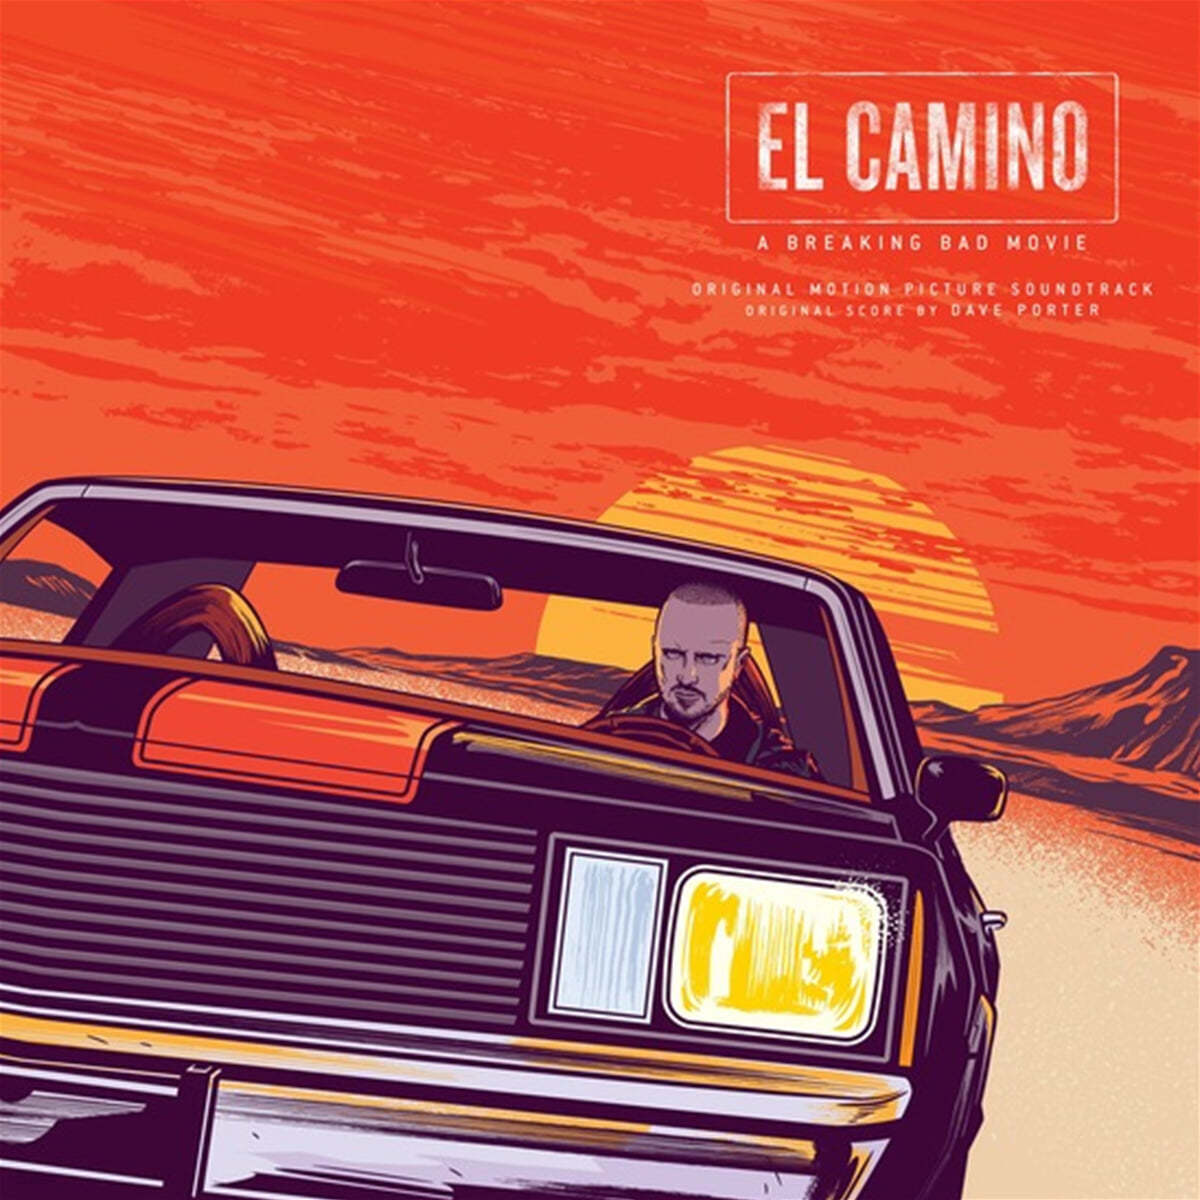 Netflix &#39;브레이킹 배드 무비: 엘 카미노&#39; 영화음악 (El Camino: A Breaking Bad Movie OST by Dave Porter) [2LP] 